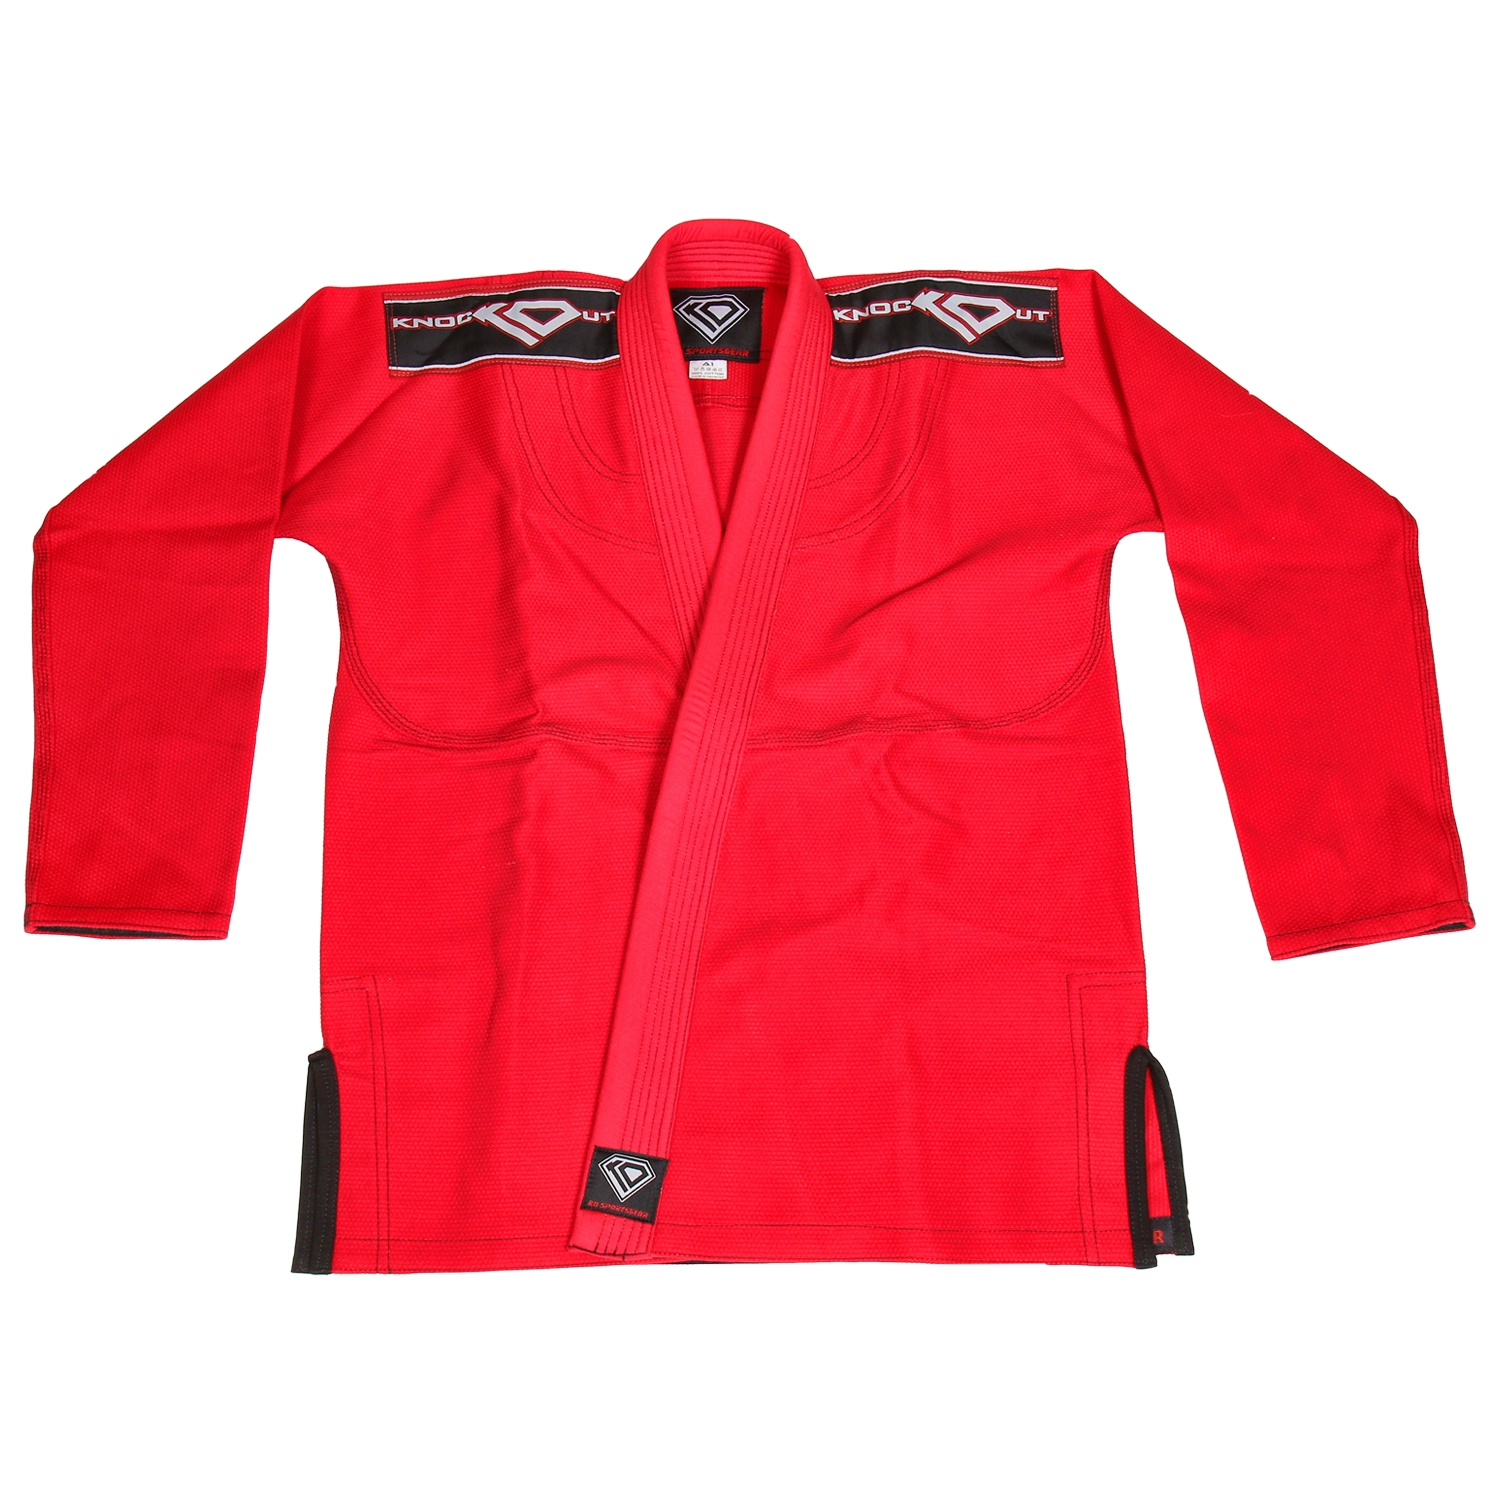 KO Sports Gear's Red Kids Gi - BJJ Kimono and Pants - Pearl Weave - For Jiu Jitsu Sports